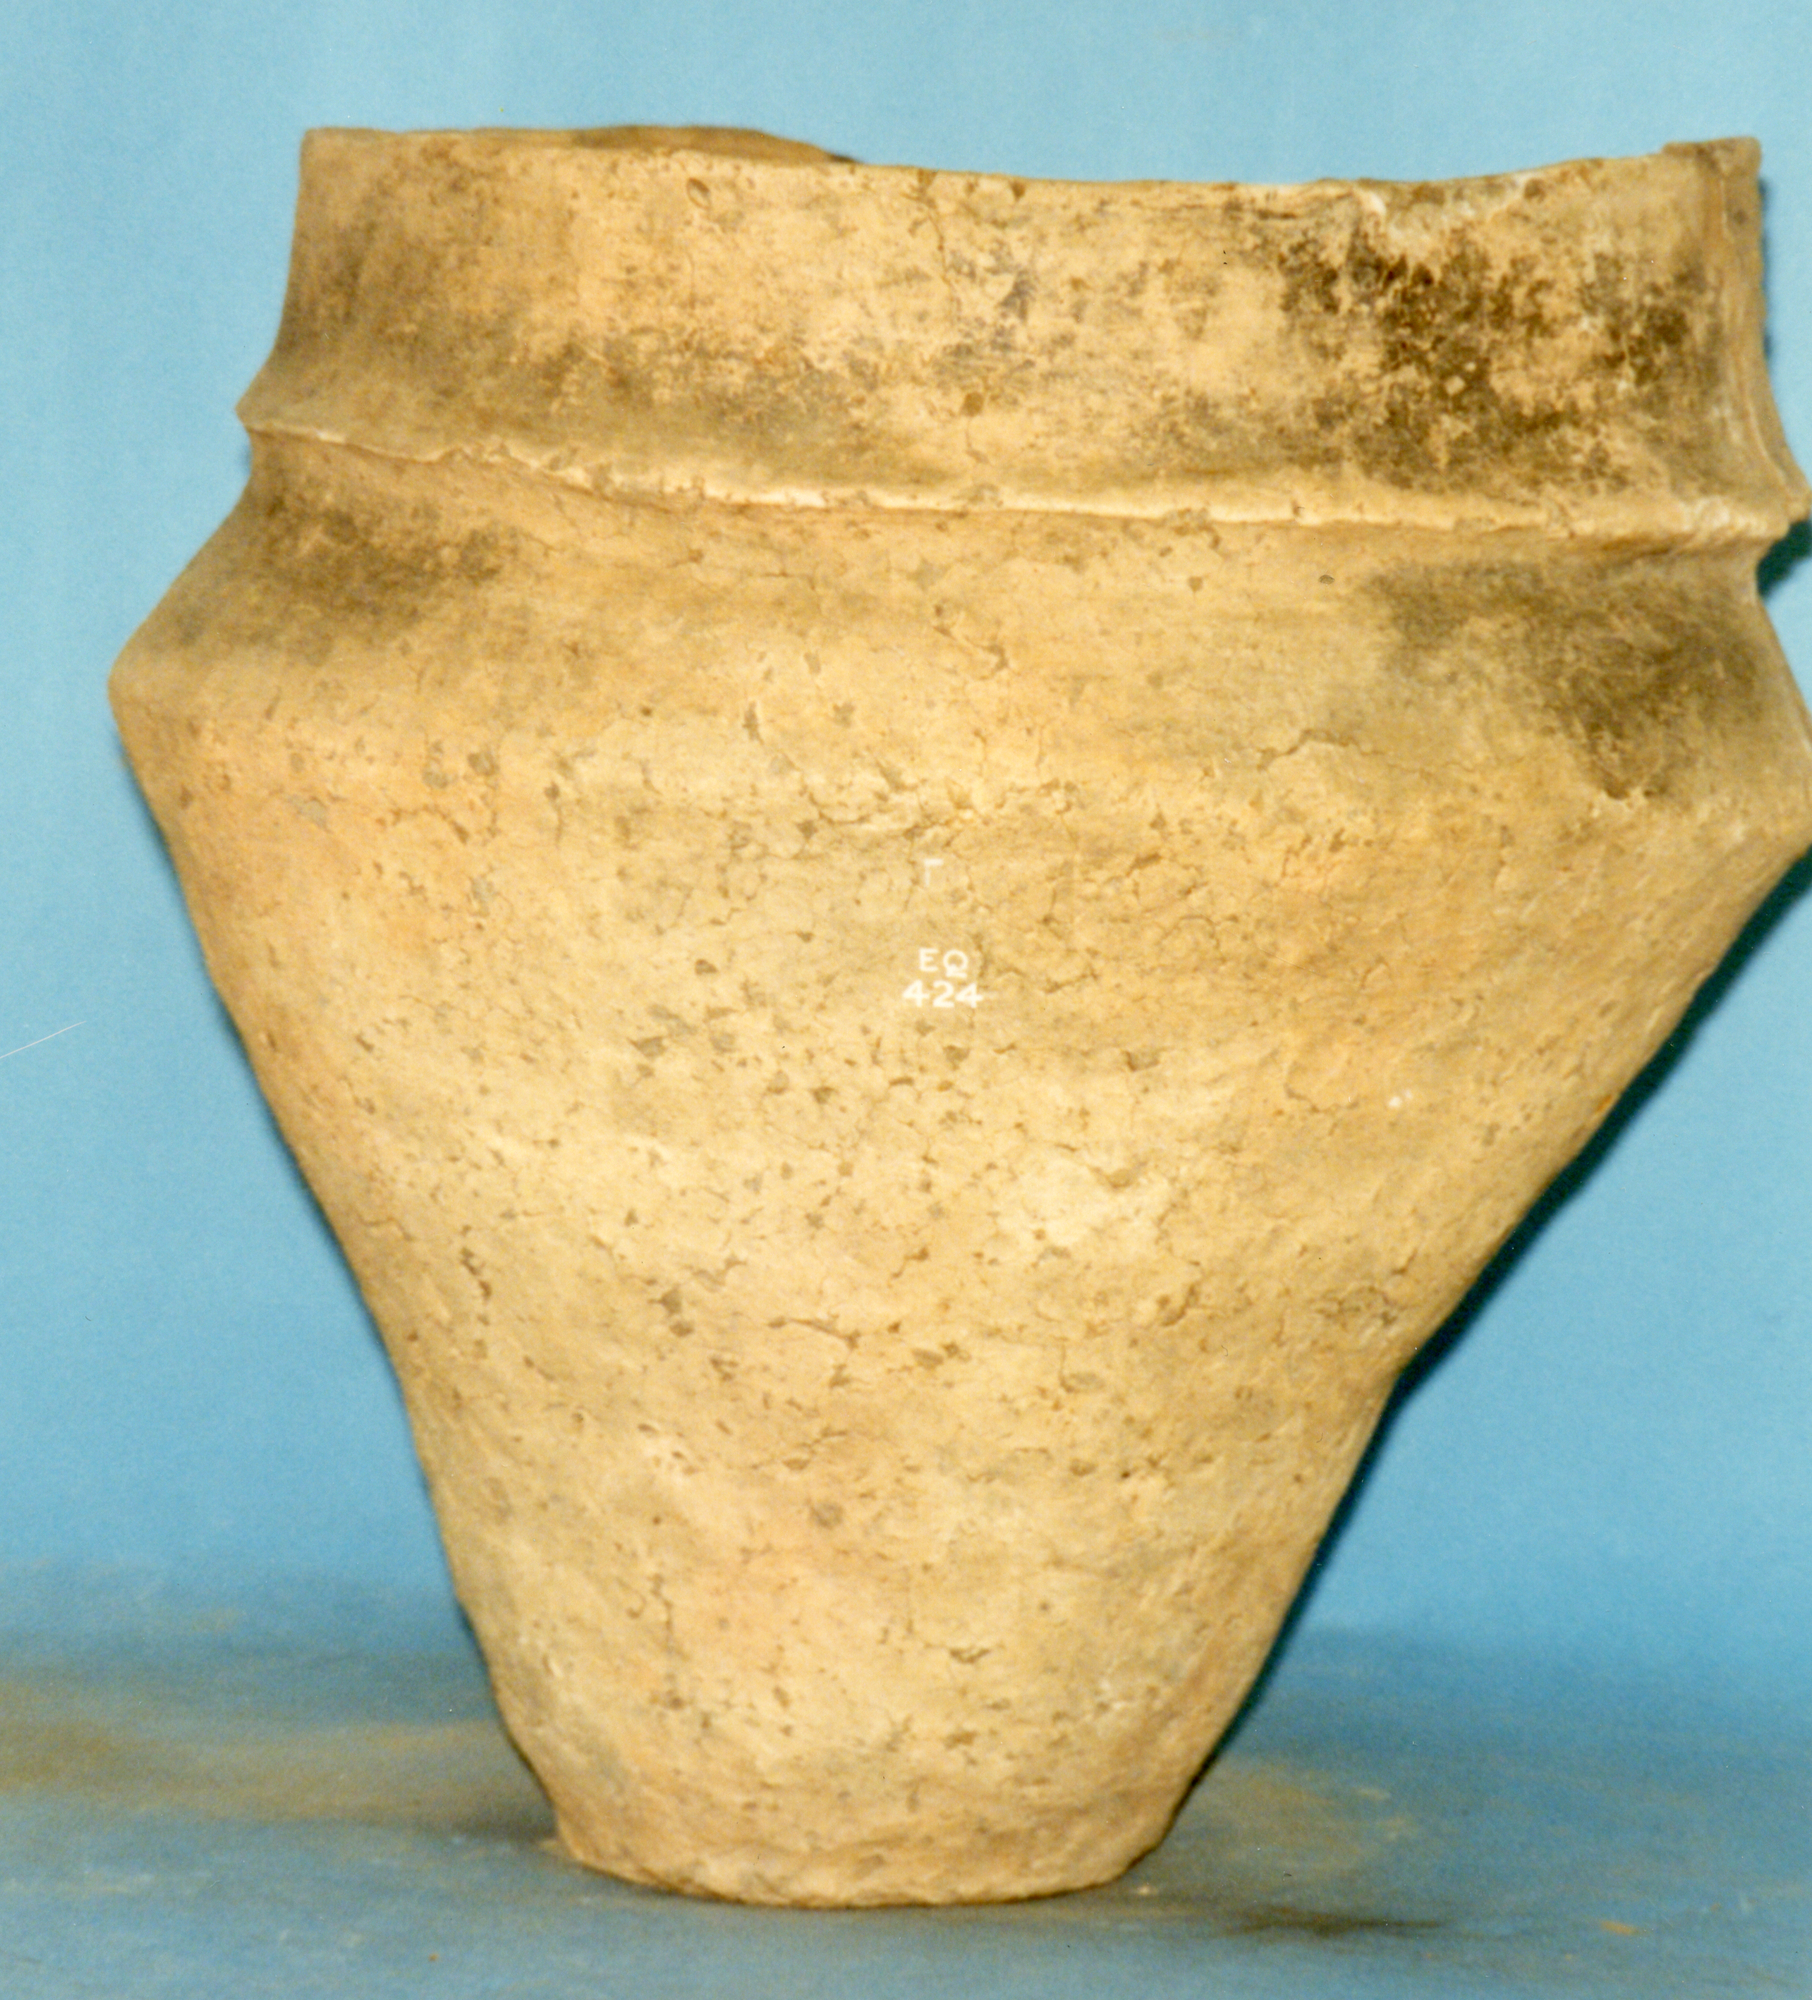 Image of Cinerary urn, from Toxside Sandpit, Gladhouse Reservoir, Midlothian © National Museums Scotland